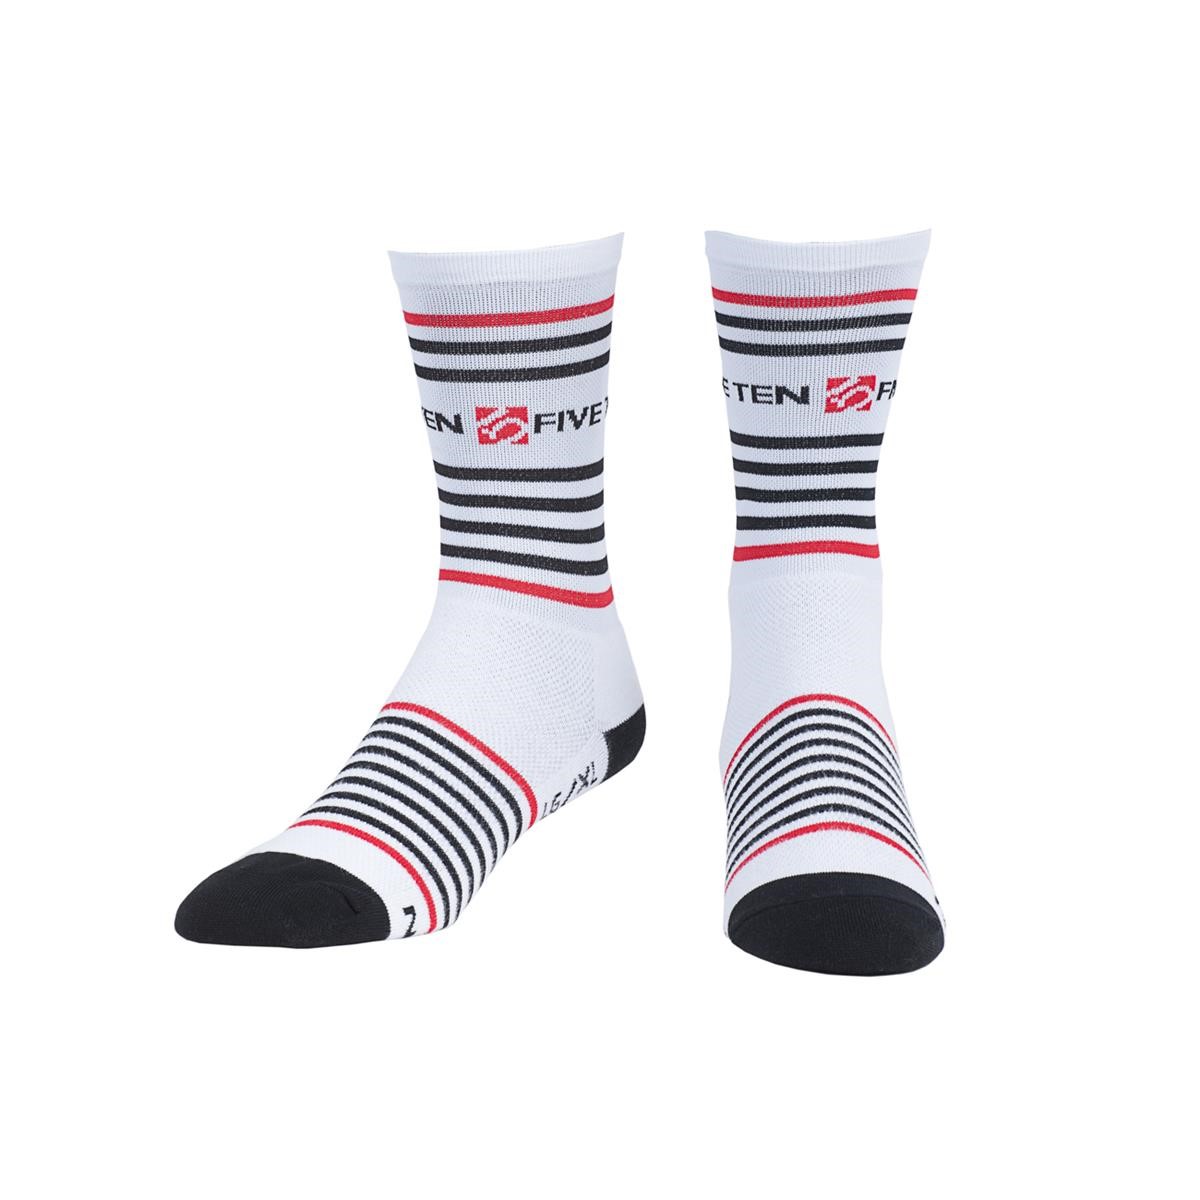 Five Ten Socken Stripes Weiß/Schwarz/Rot